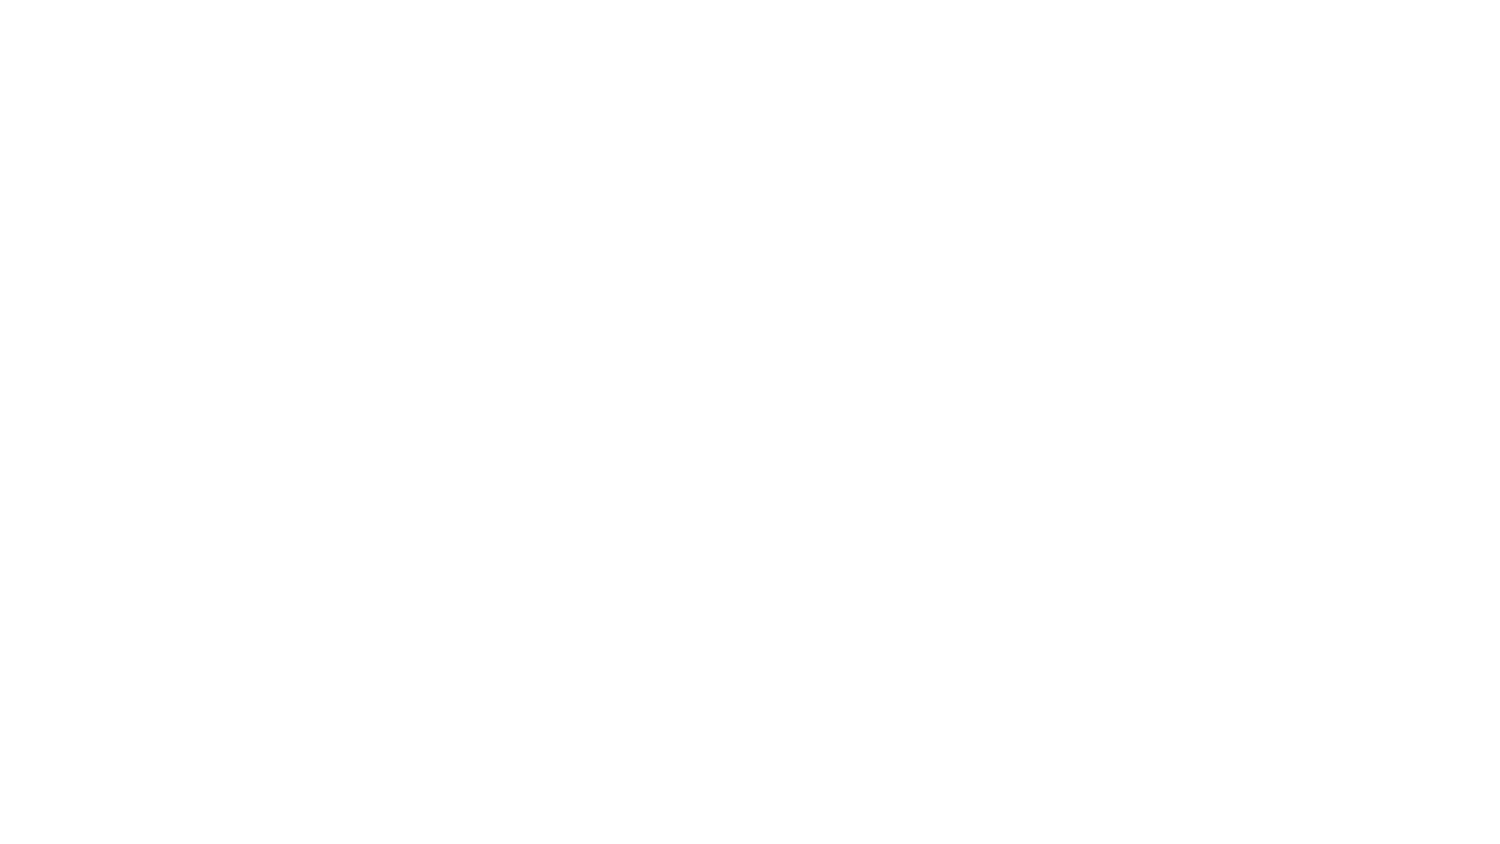 Chris Chan